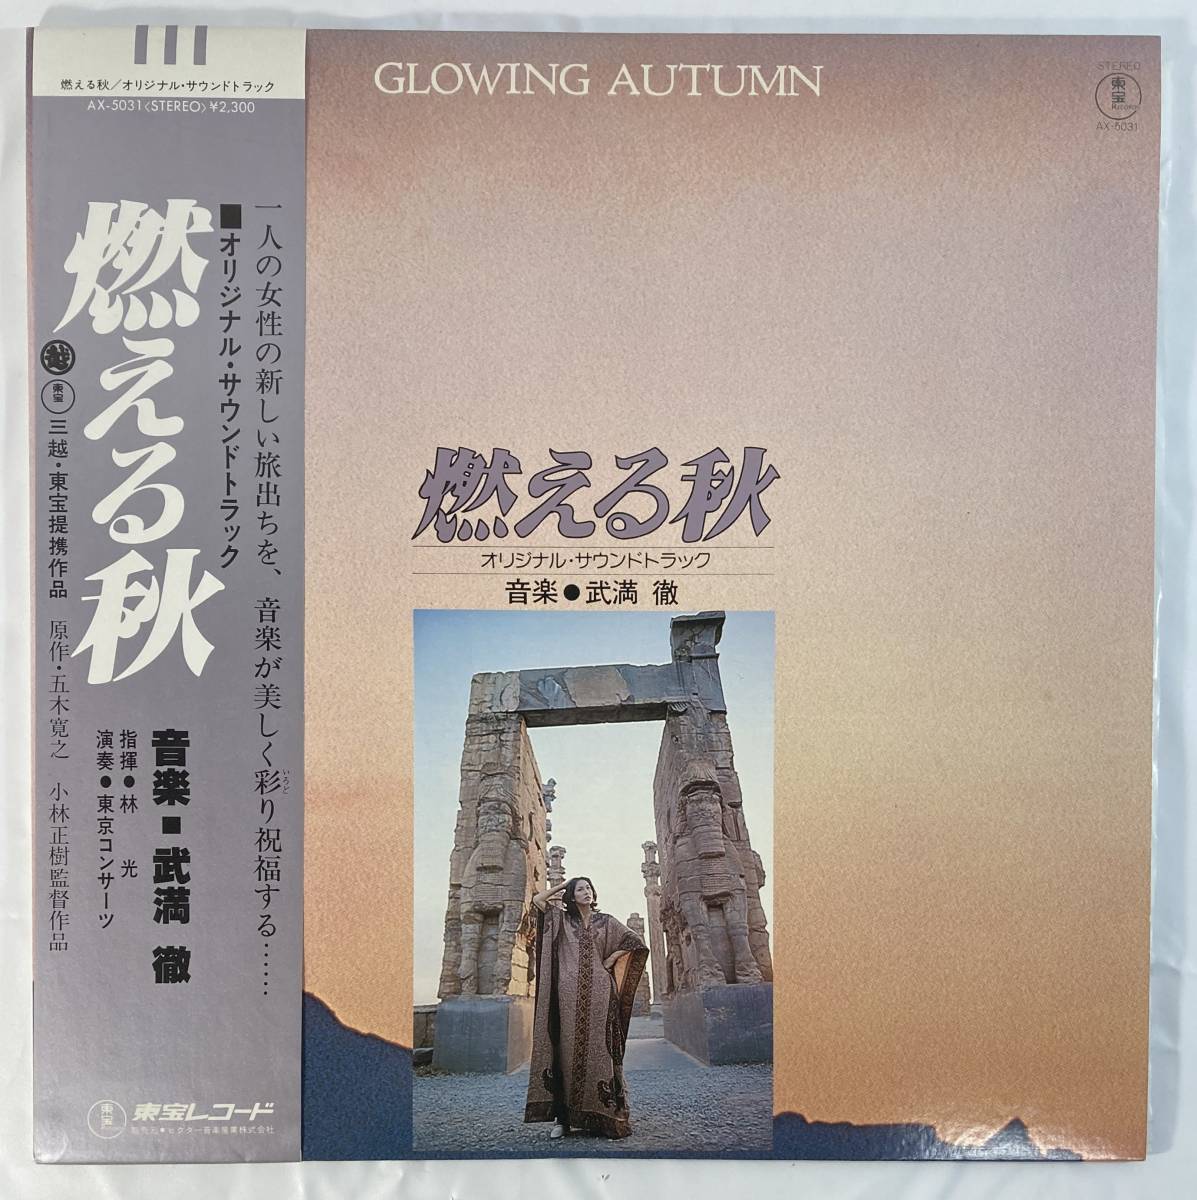  burn autumn (1978). full . domestic record LP higashi .AX-5031 STEREO obi attaching 